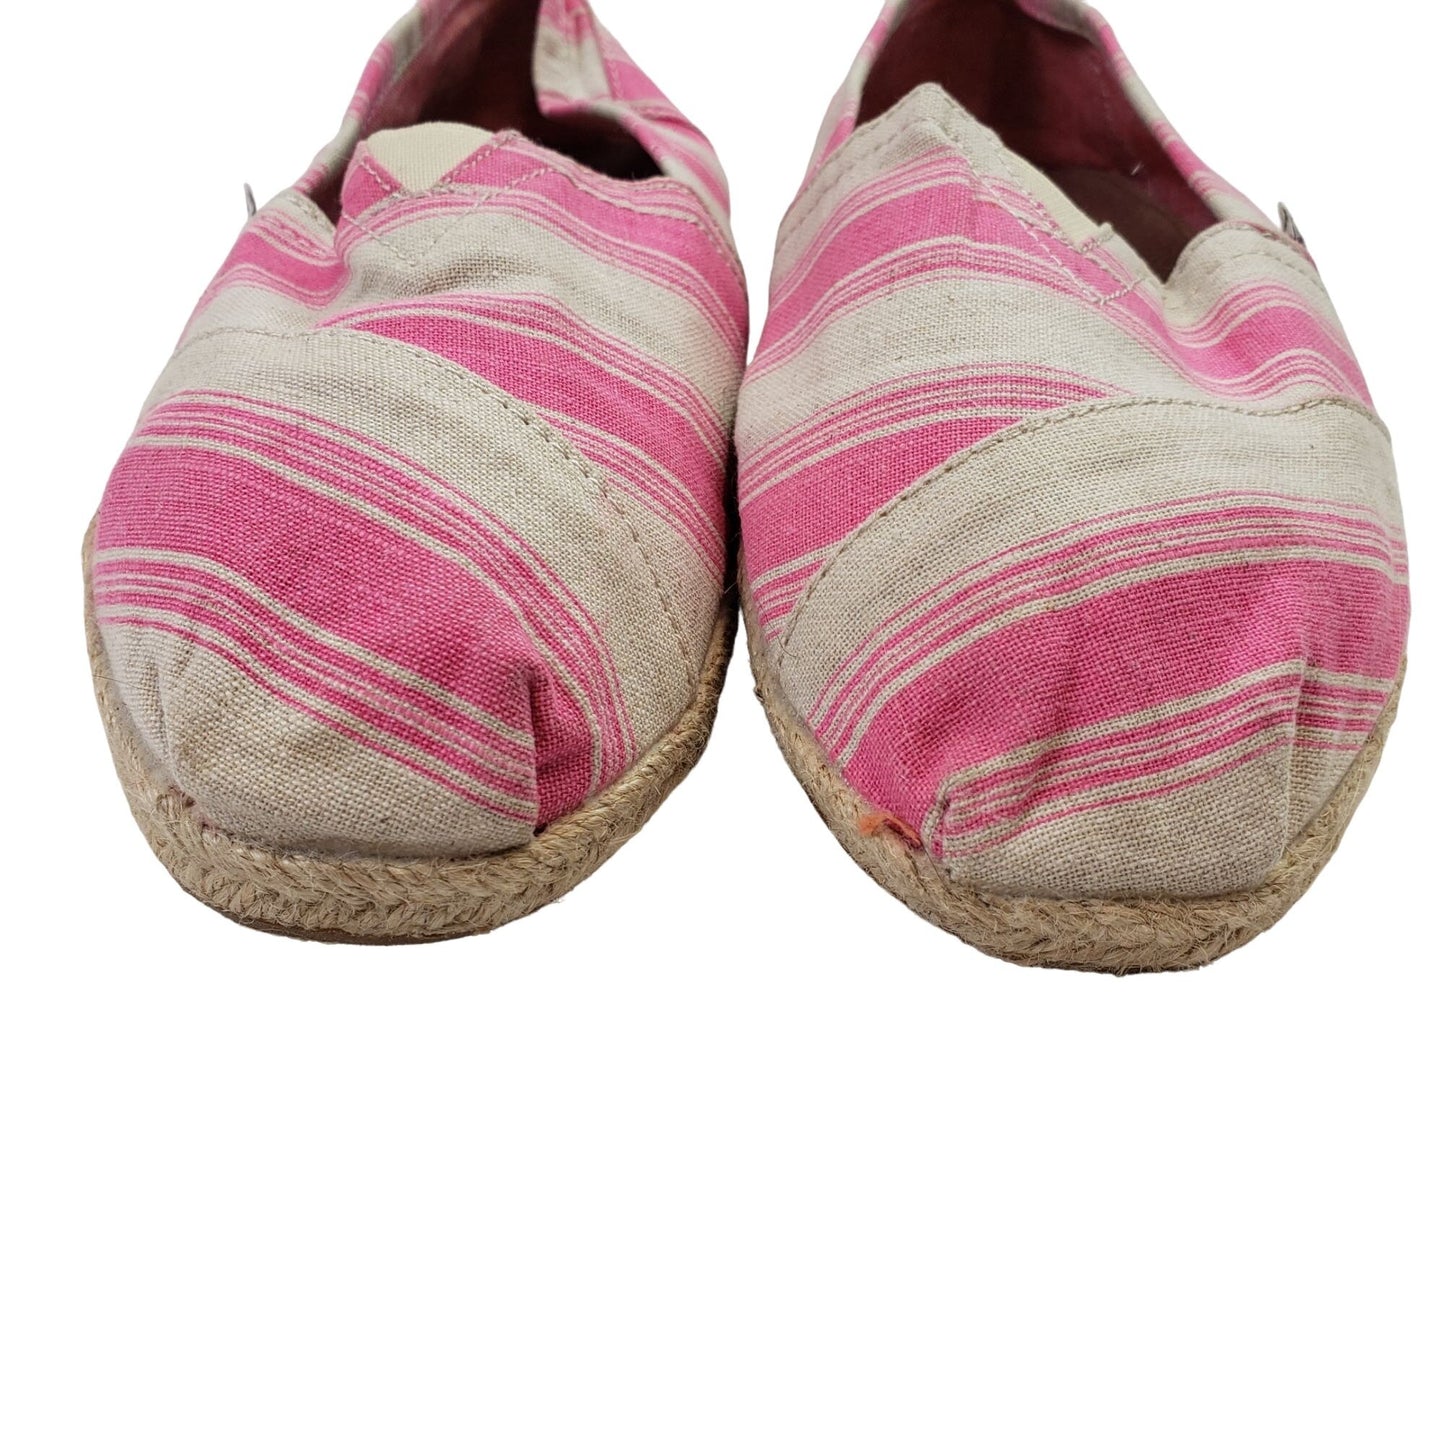 Toms Apalgarta Pink & Cream Striped Shoes Size 9.5